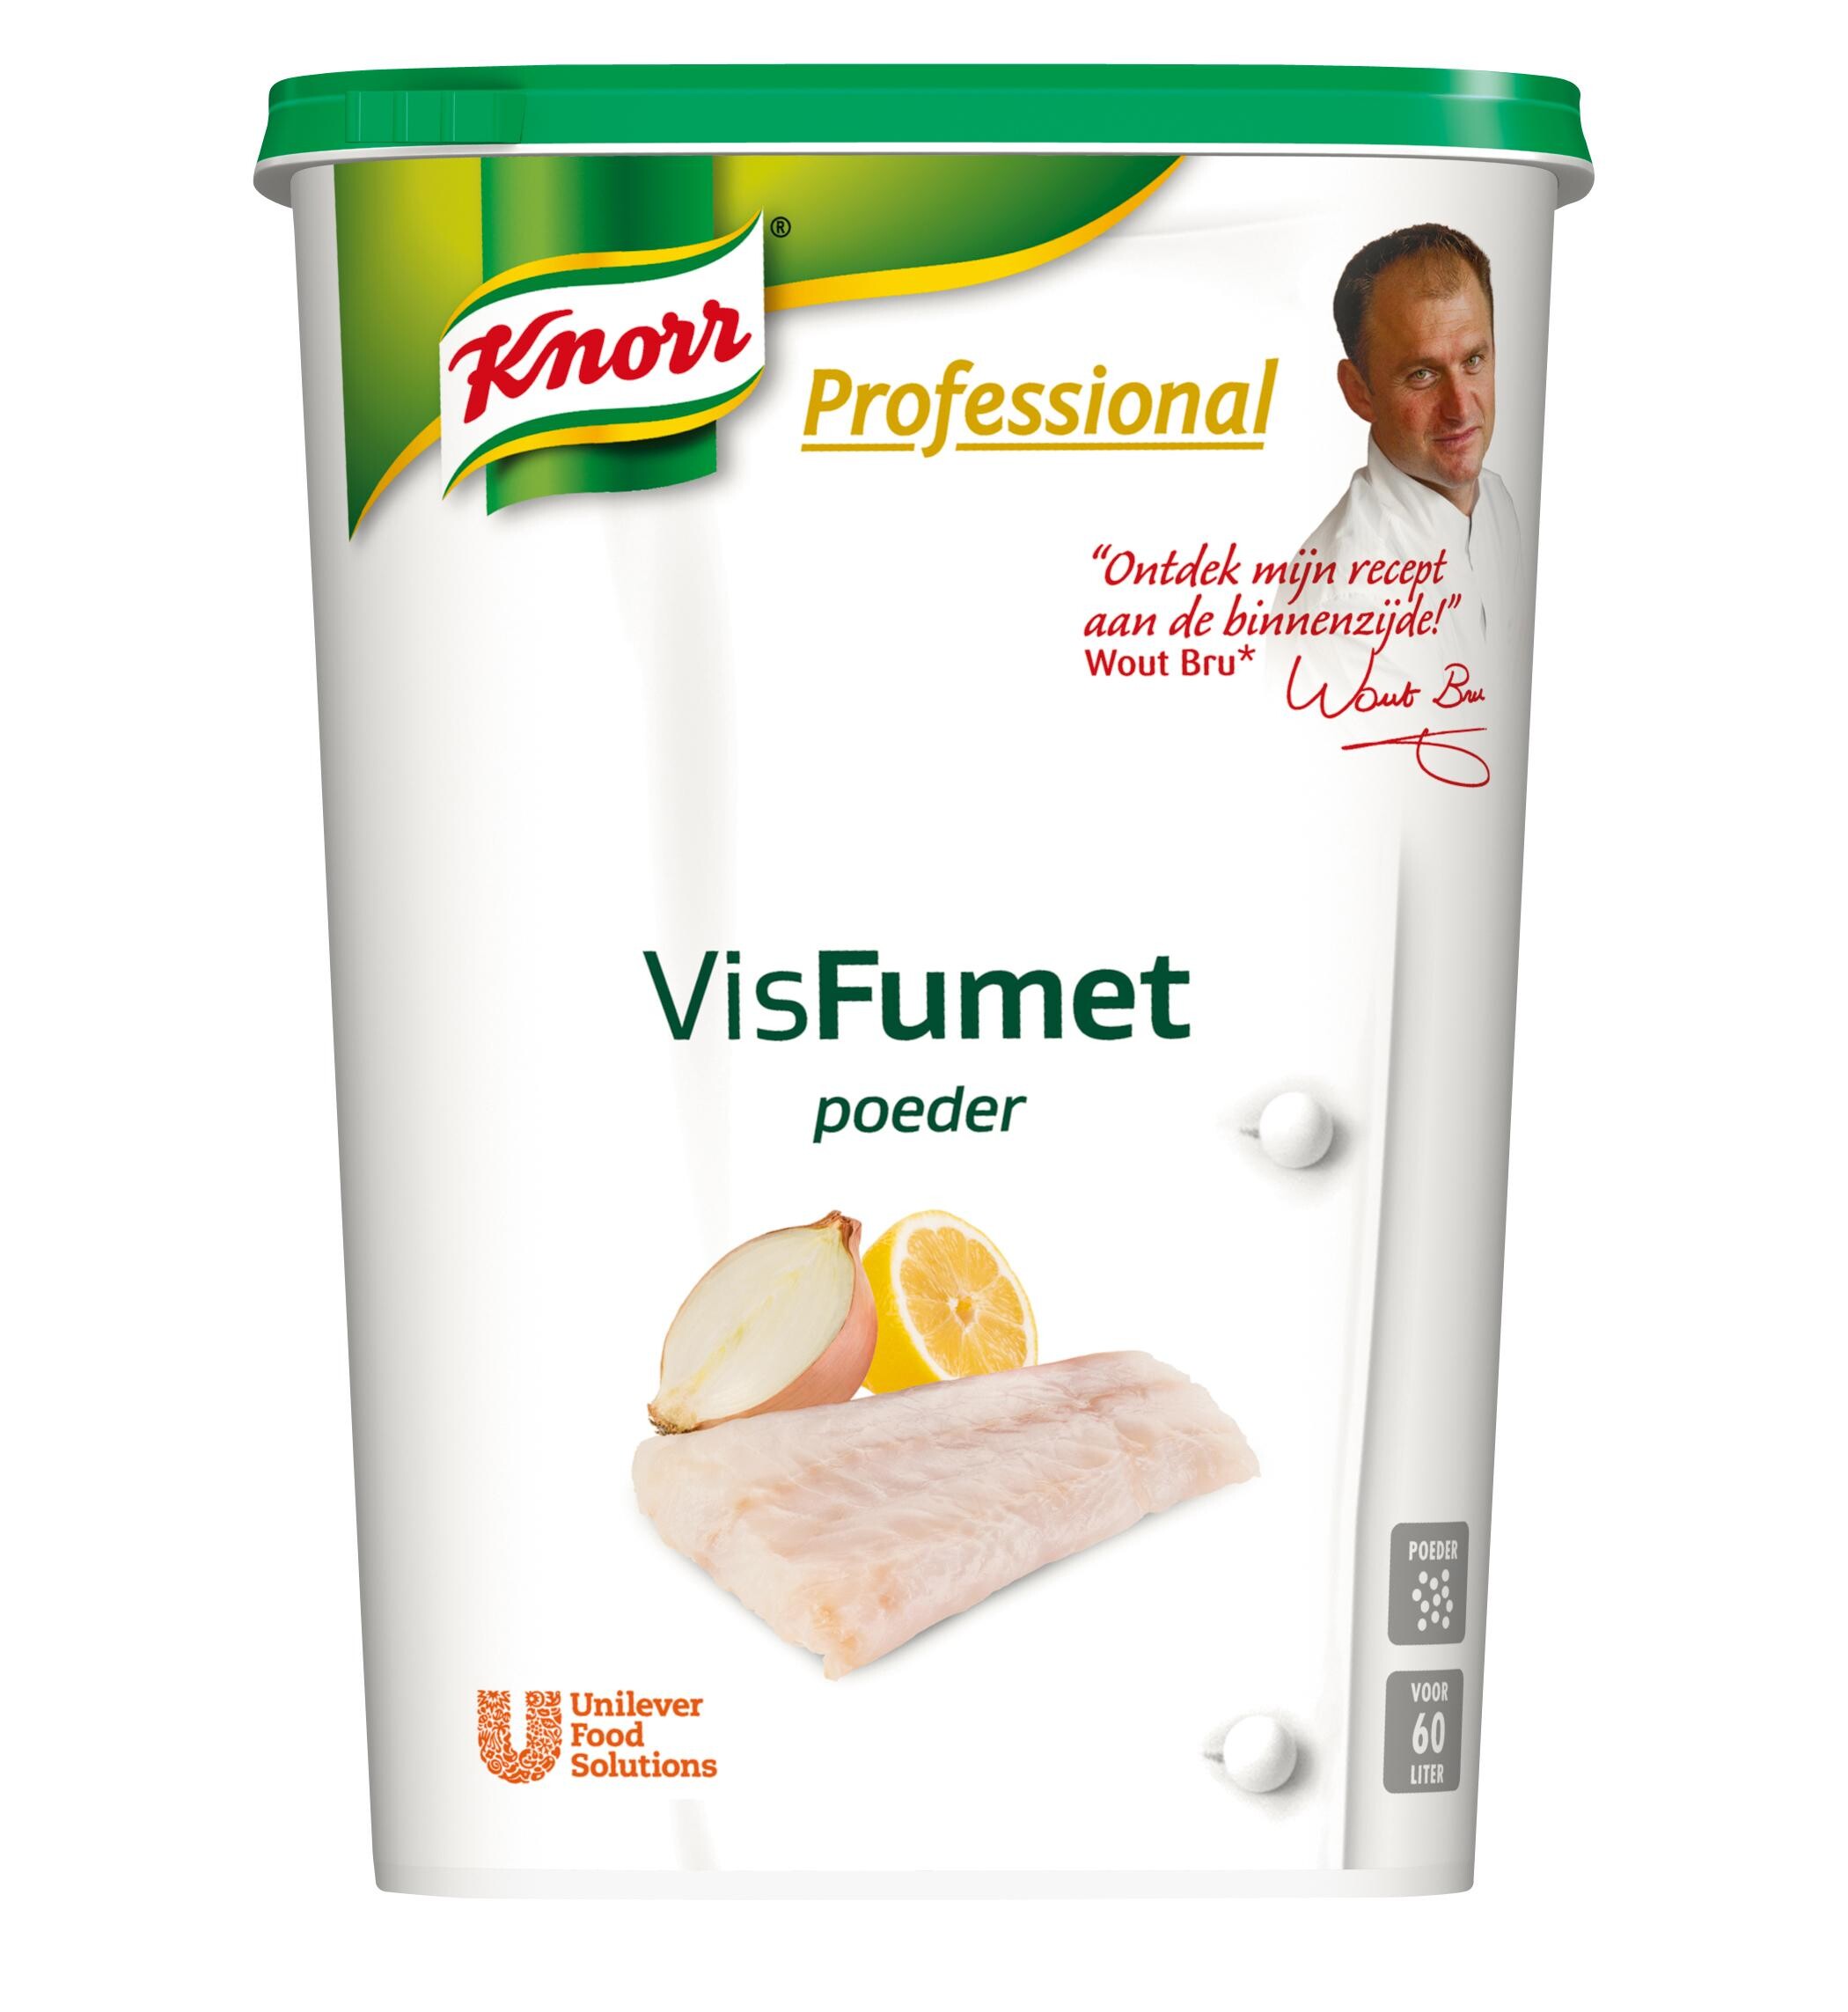 Knorr Professional Visfumet poeder 900gr Carte Blanche